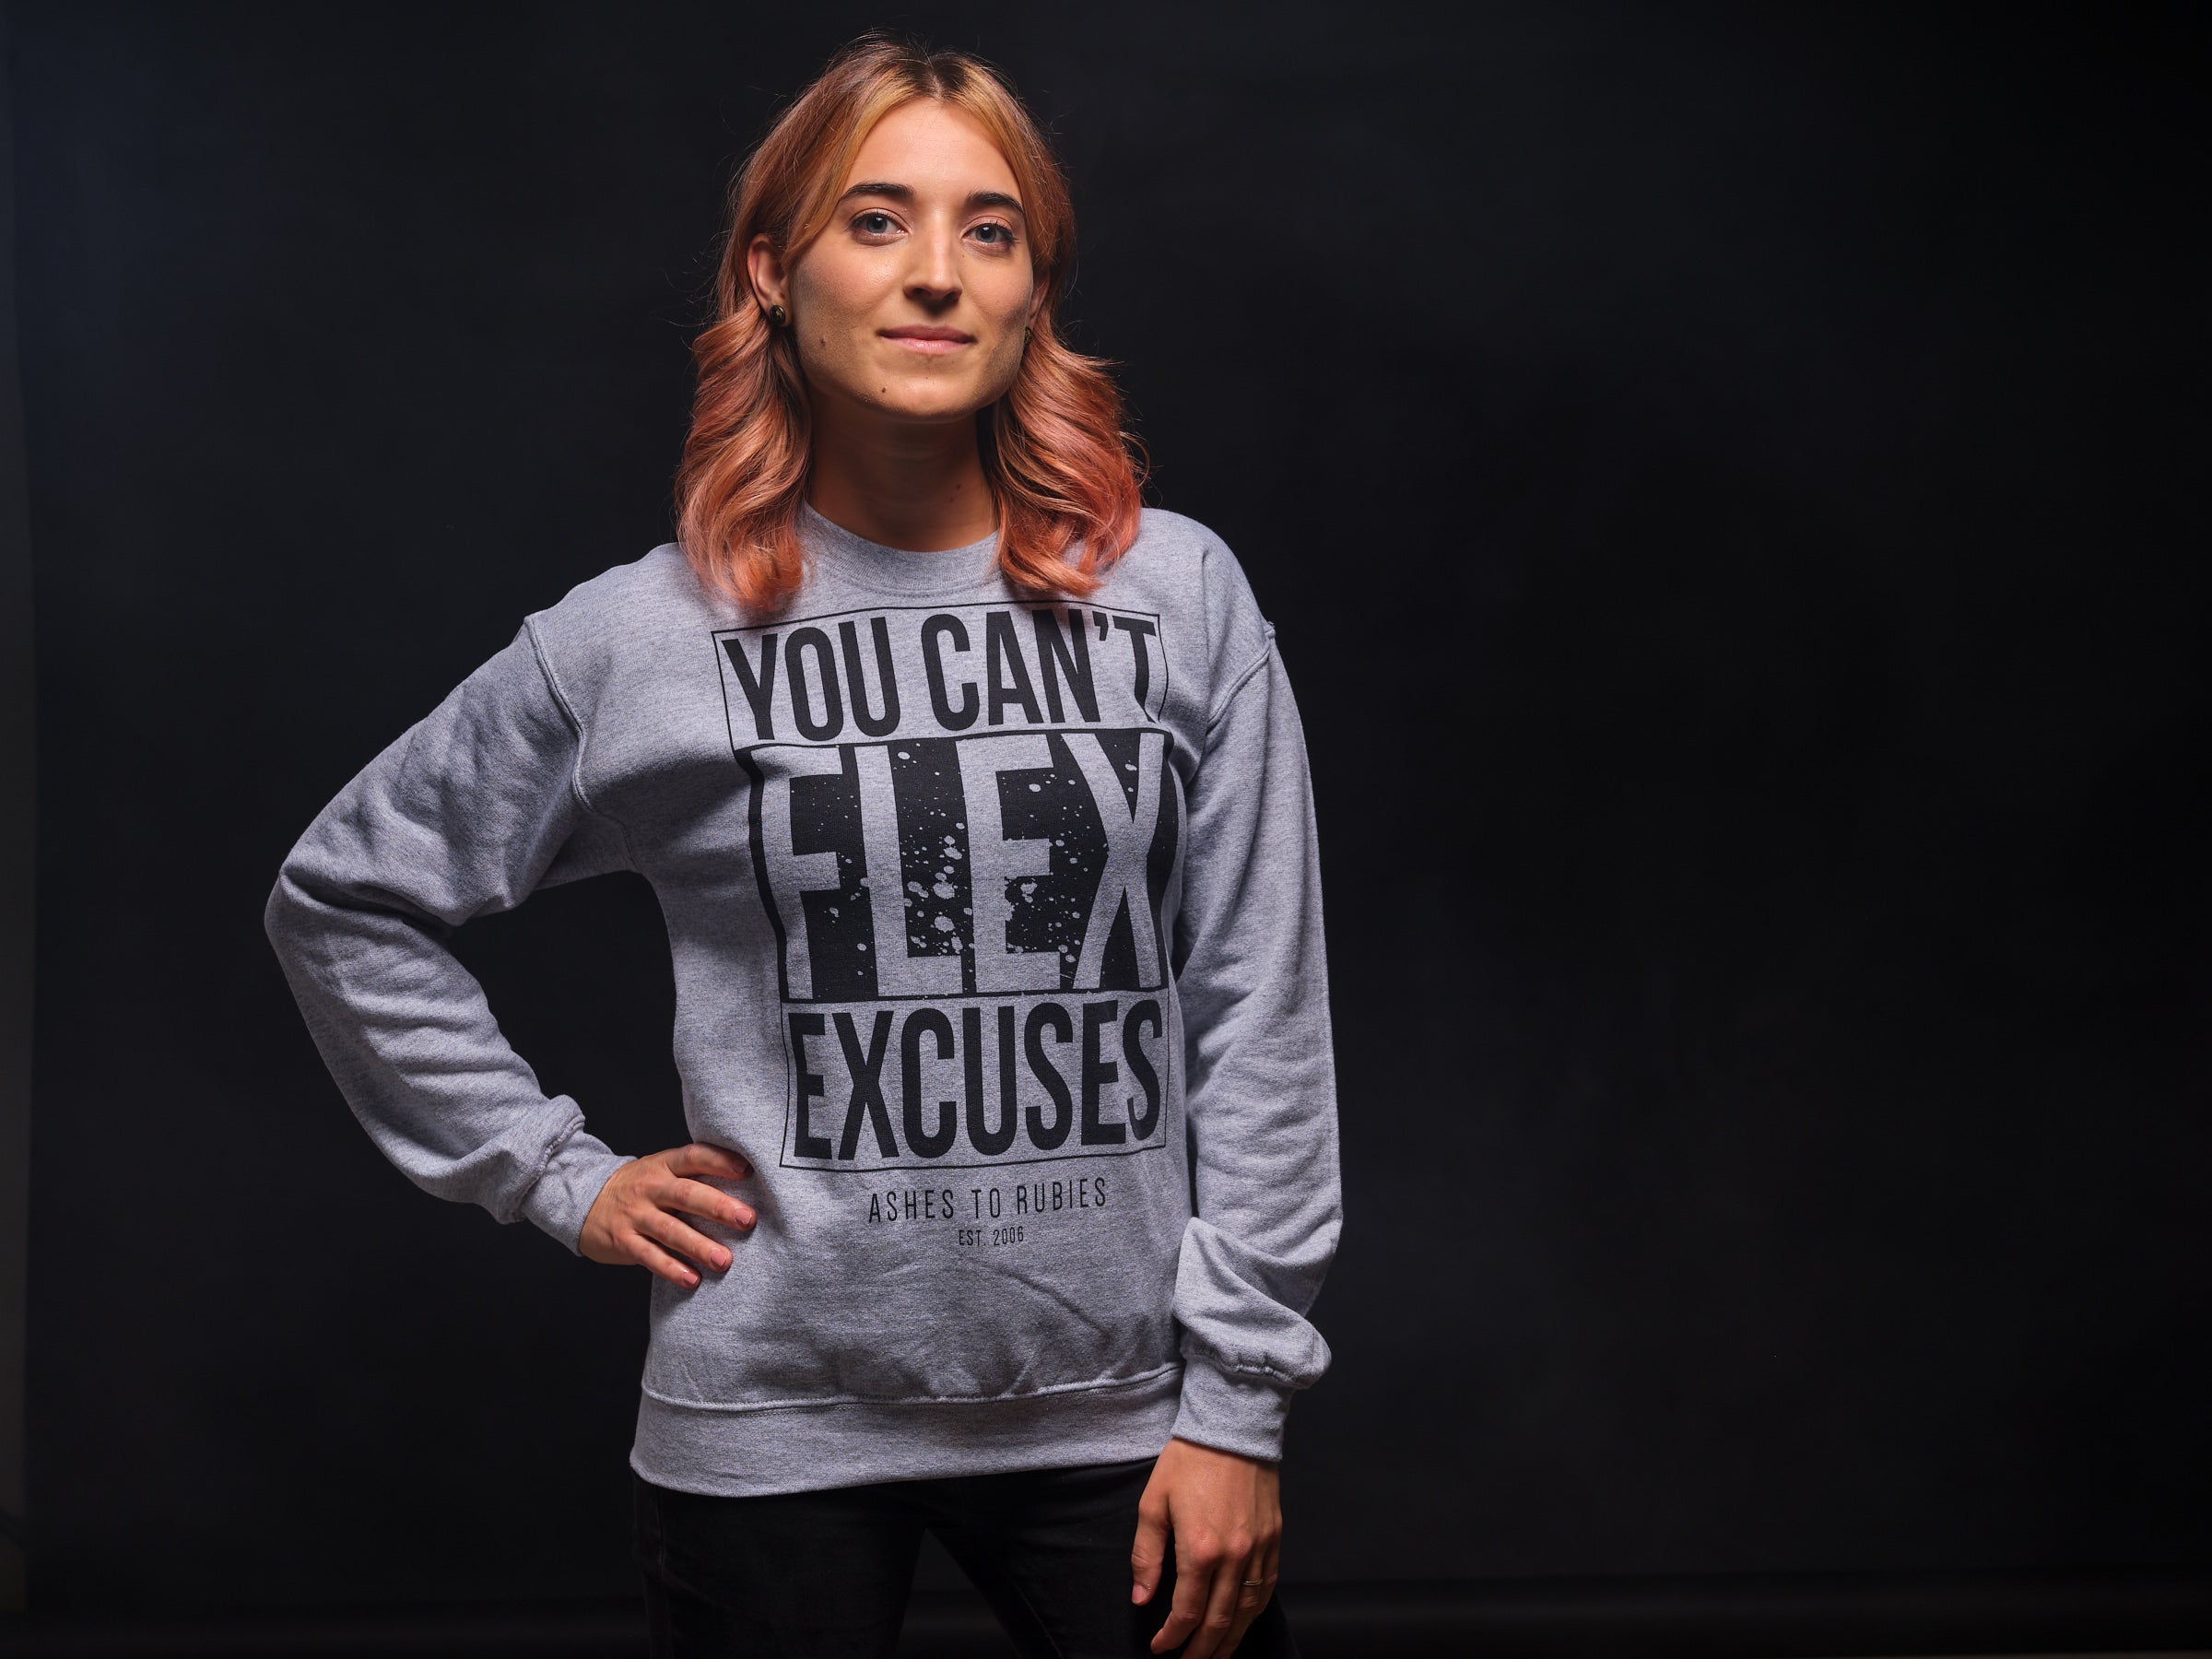 Can't Flex Excuses Sweatshirt